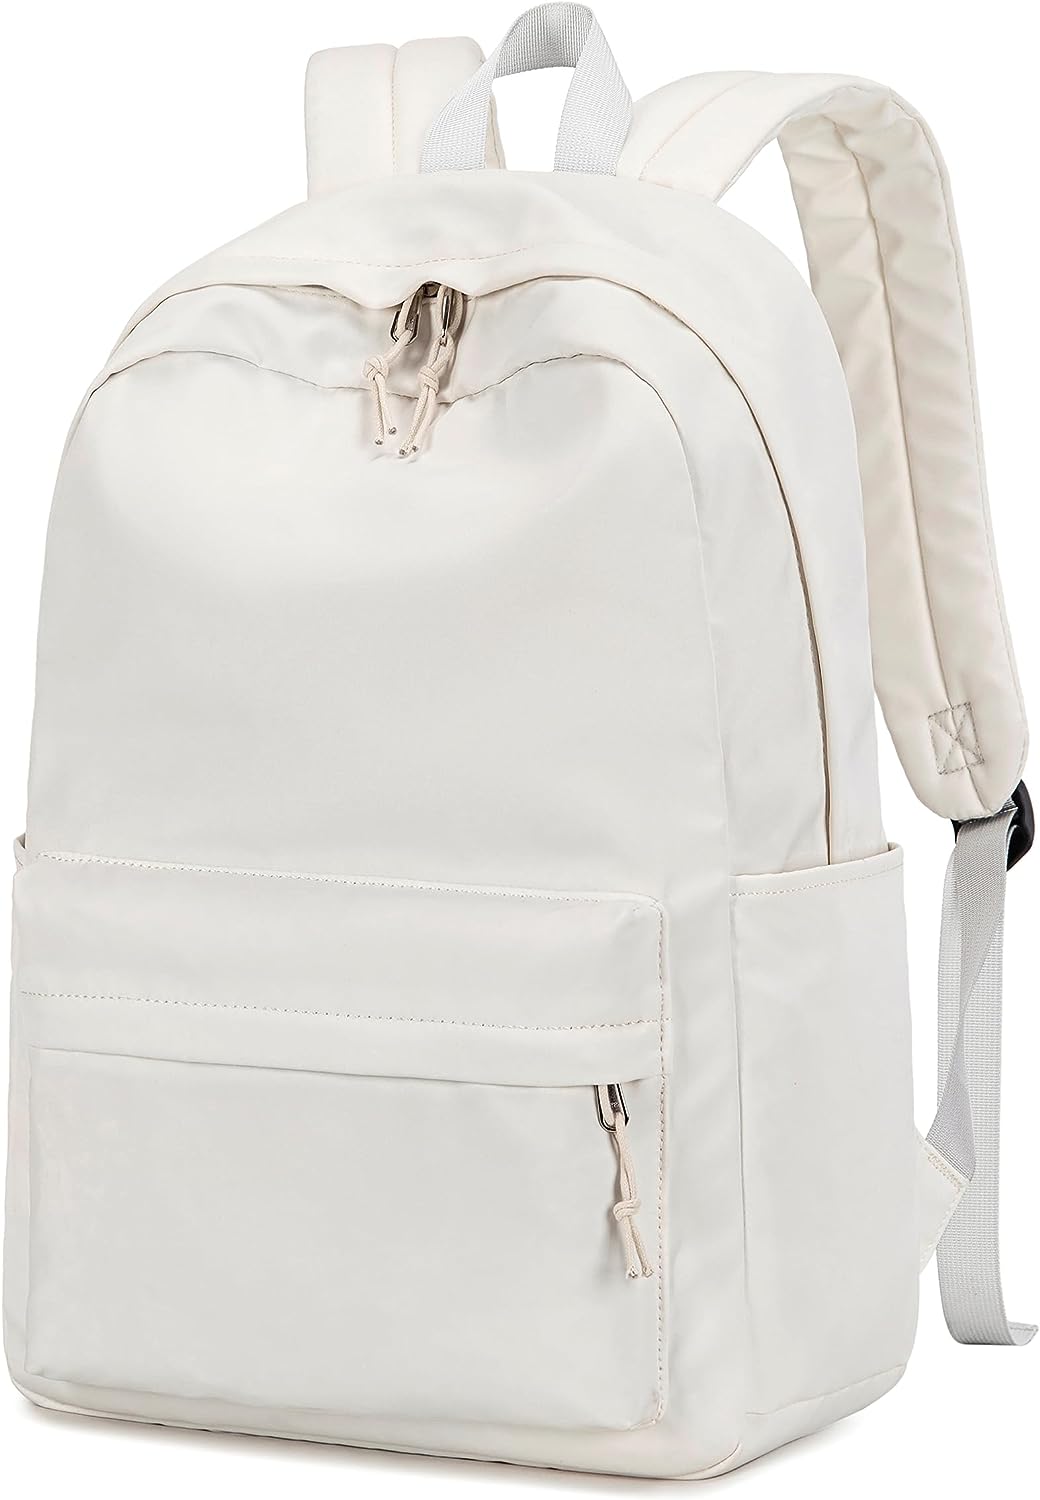 School Backpack for Teen Girls